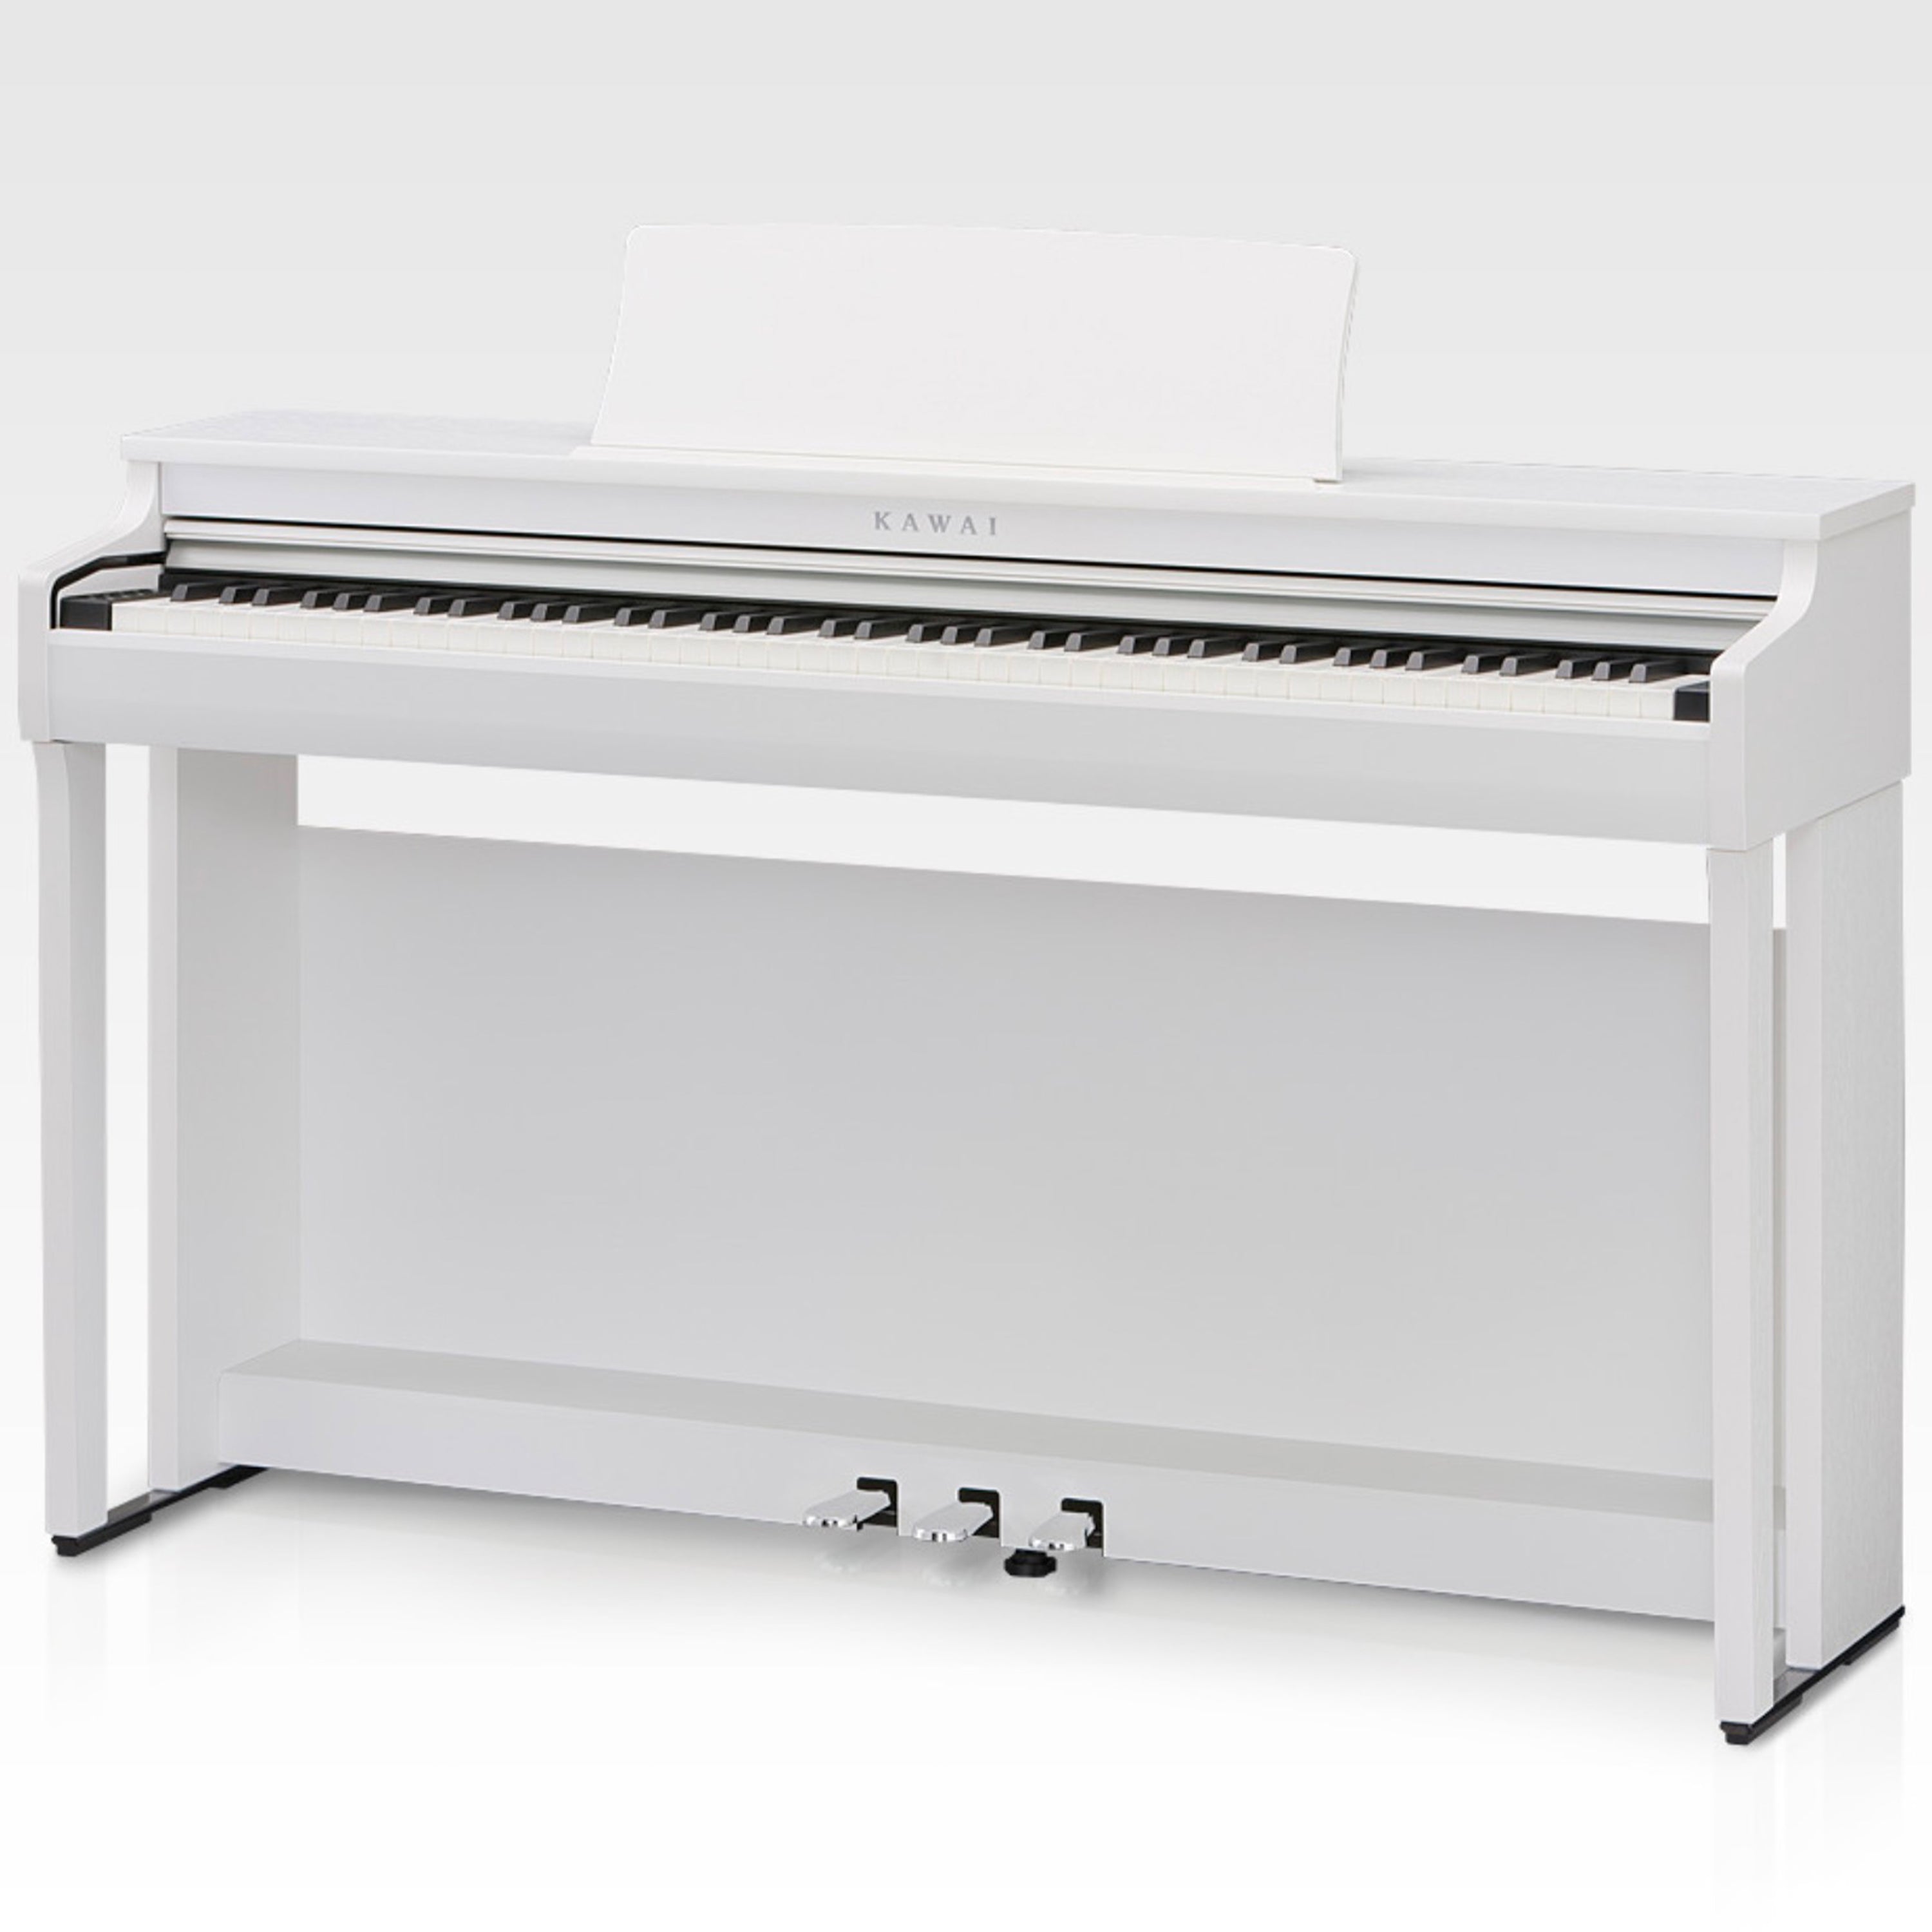 Kawai CN29 Digital Piano - Satin White - left angle